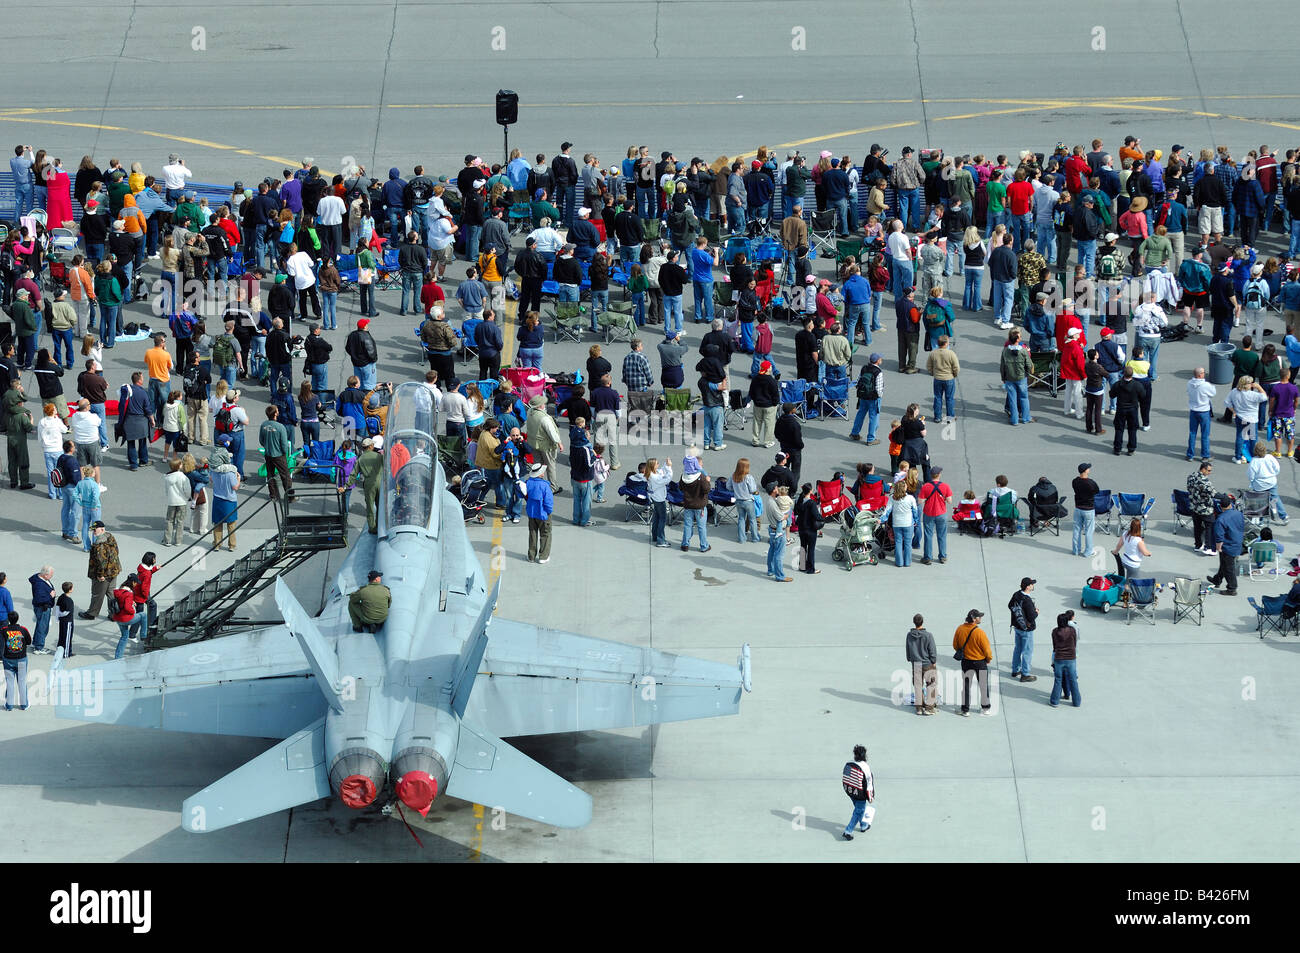 Panoramica di spettatori e jet da combattimento F-18 Hornet su asfalto, Anchorage air show, Elmendorf Air Force Base in Alaska, STATI UNITI D'AMERICA Foto Stock